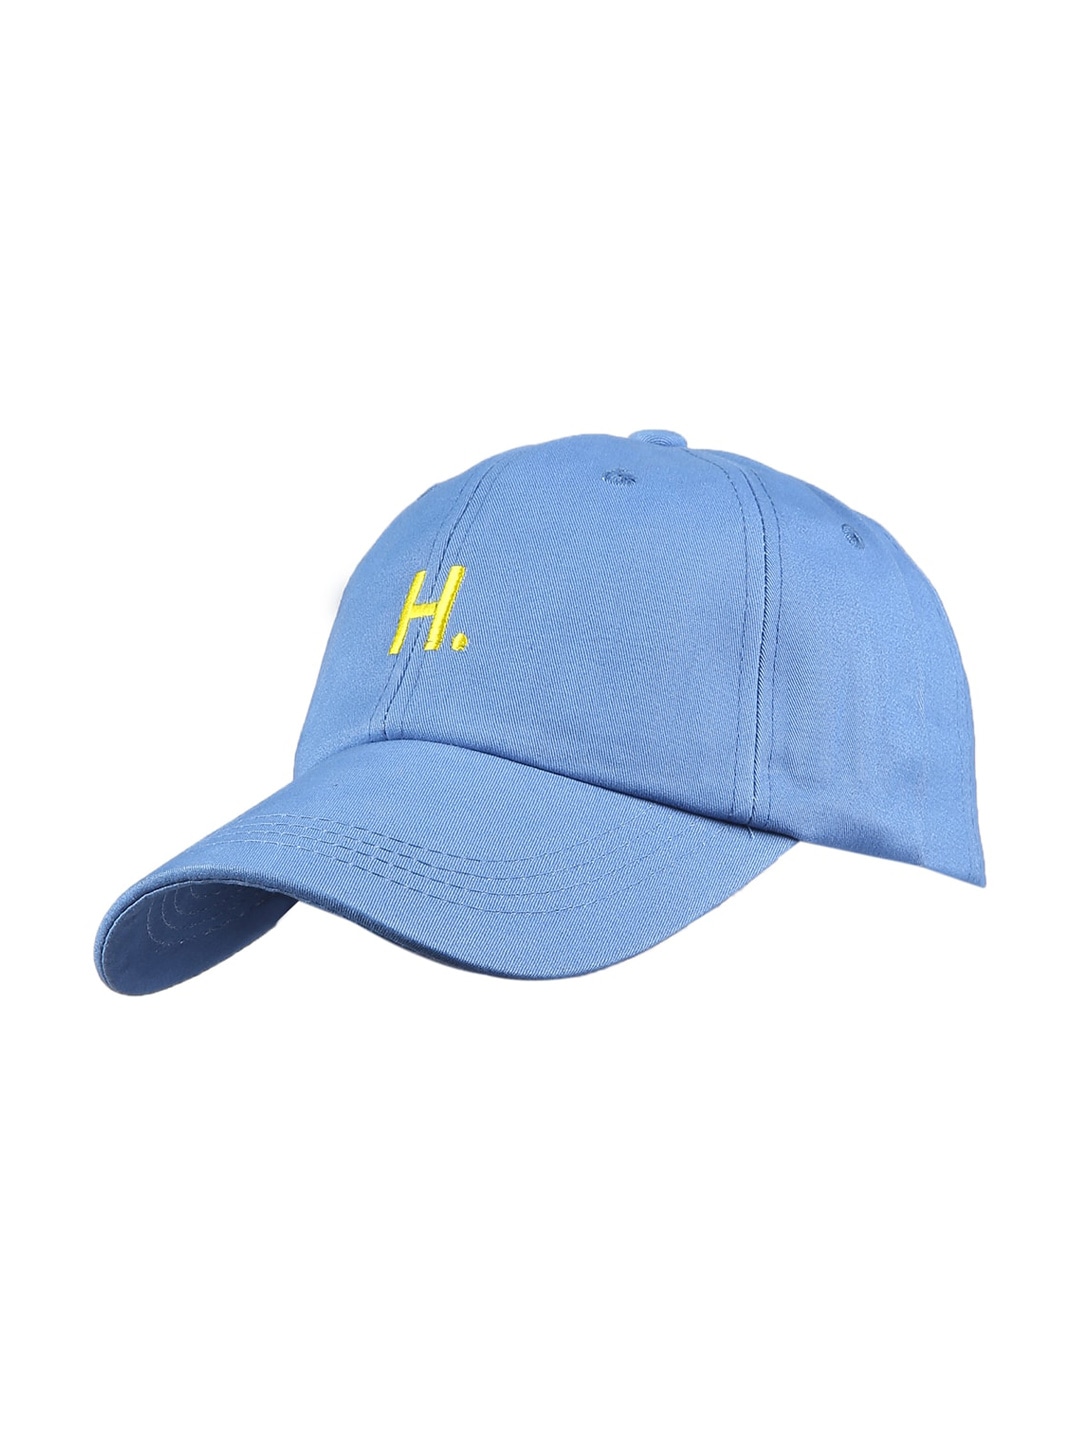 Accessories Hat | Bunnywave Light-Blue Solid Snapback Sun Hat - VD69476